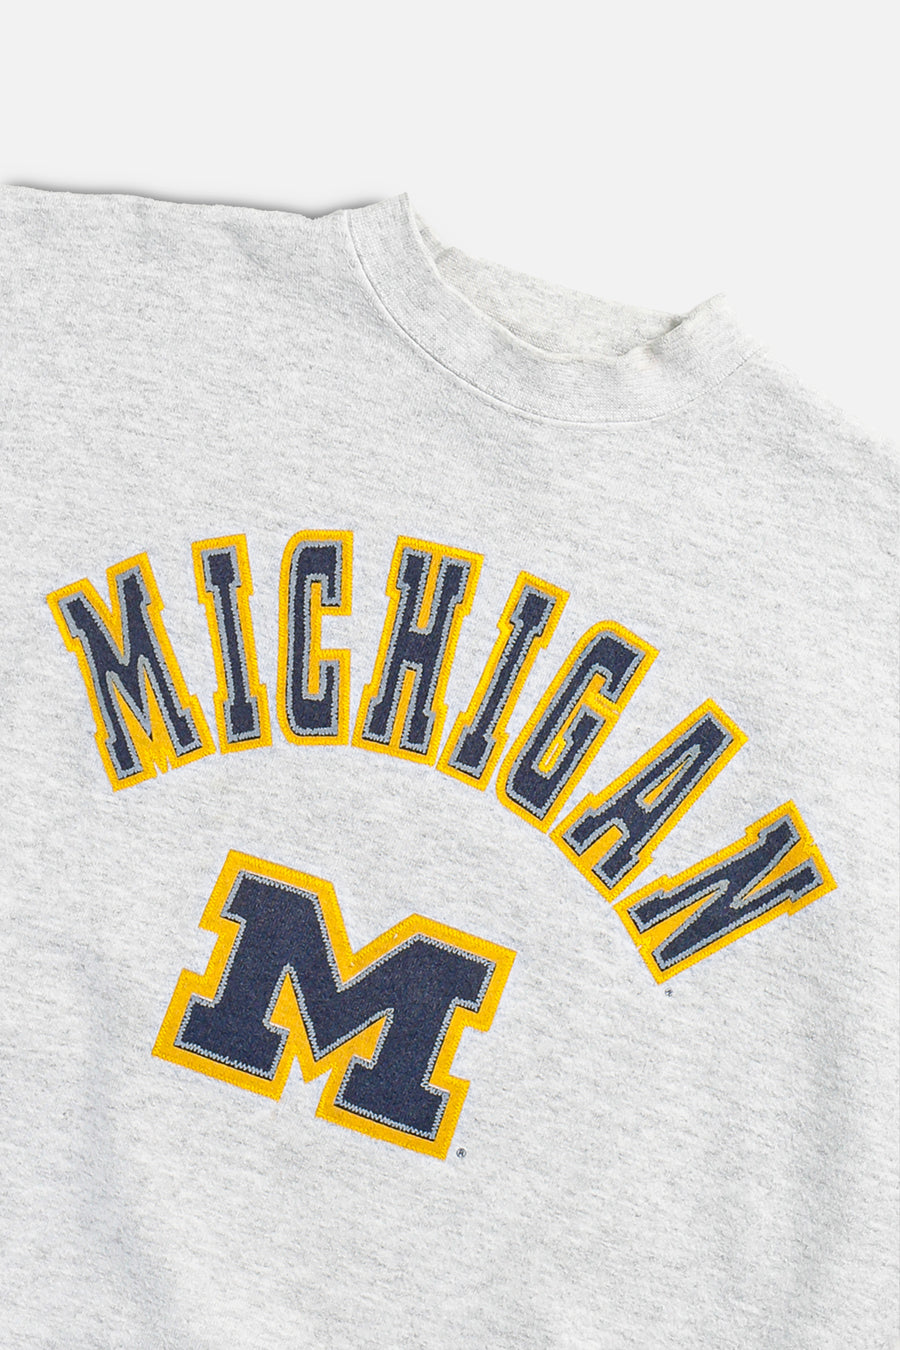 Vintage Michigan Sweatshirt - XL